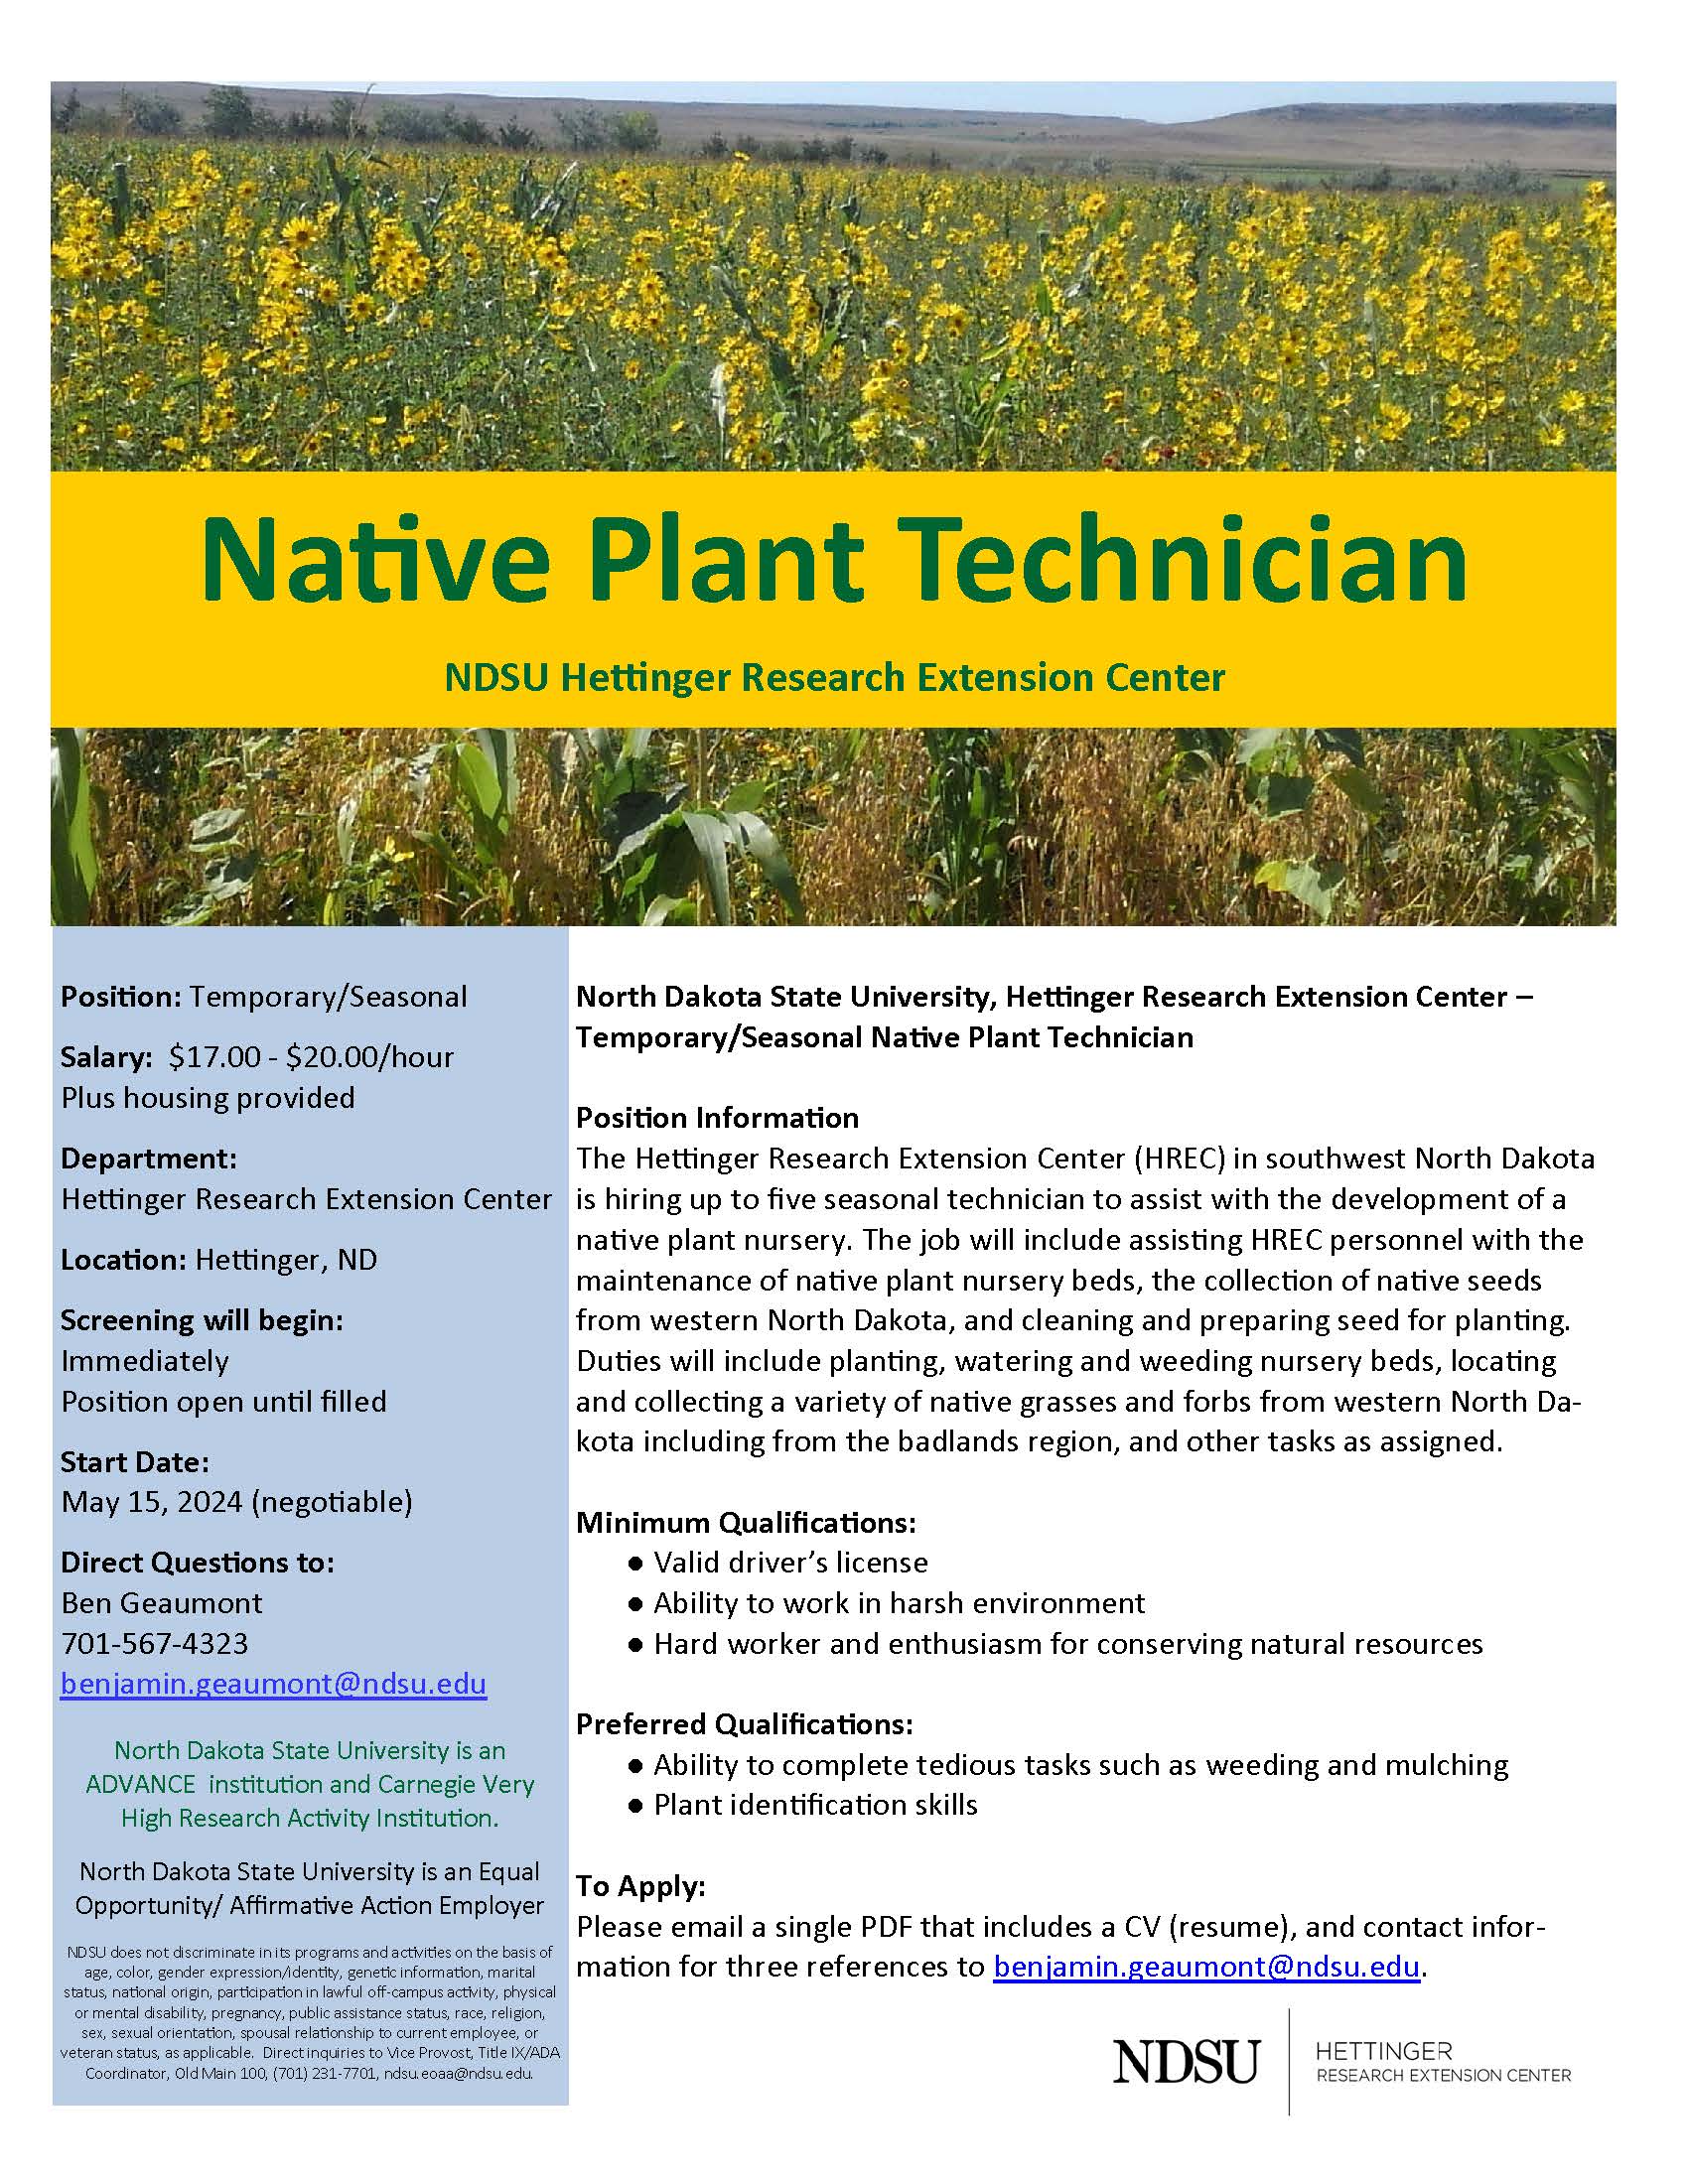 Temp/Seasonal Native Plant Technicain position information